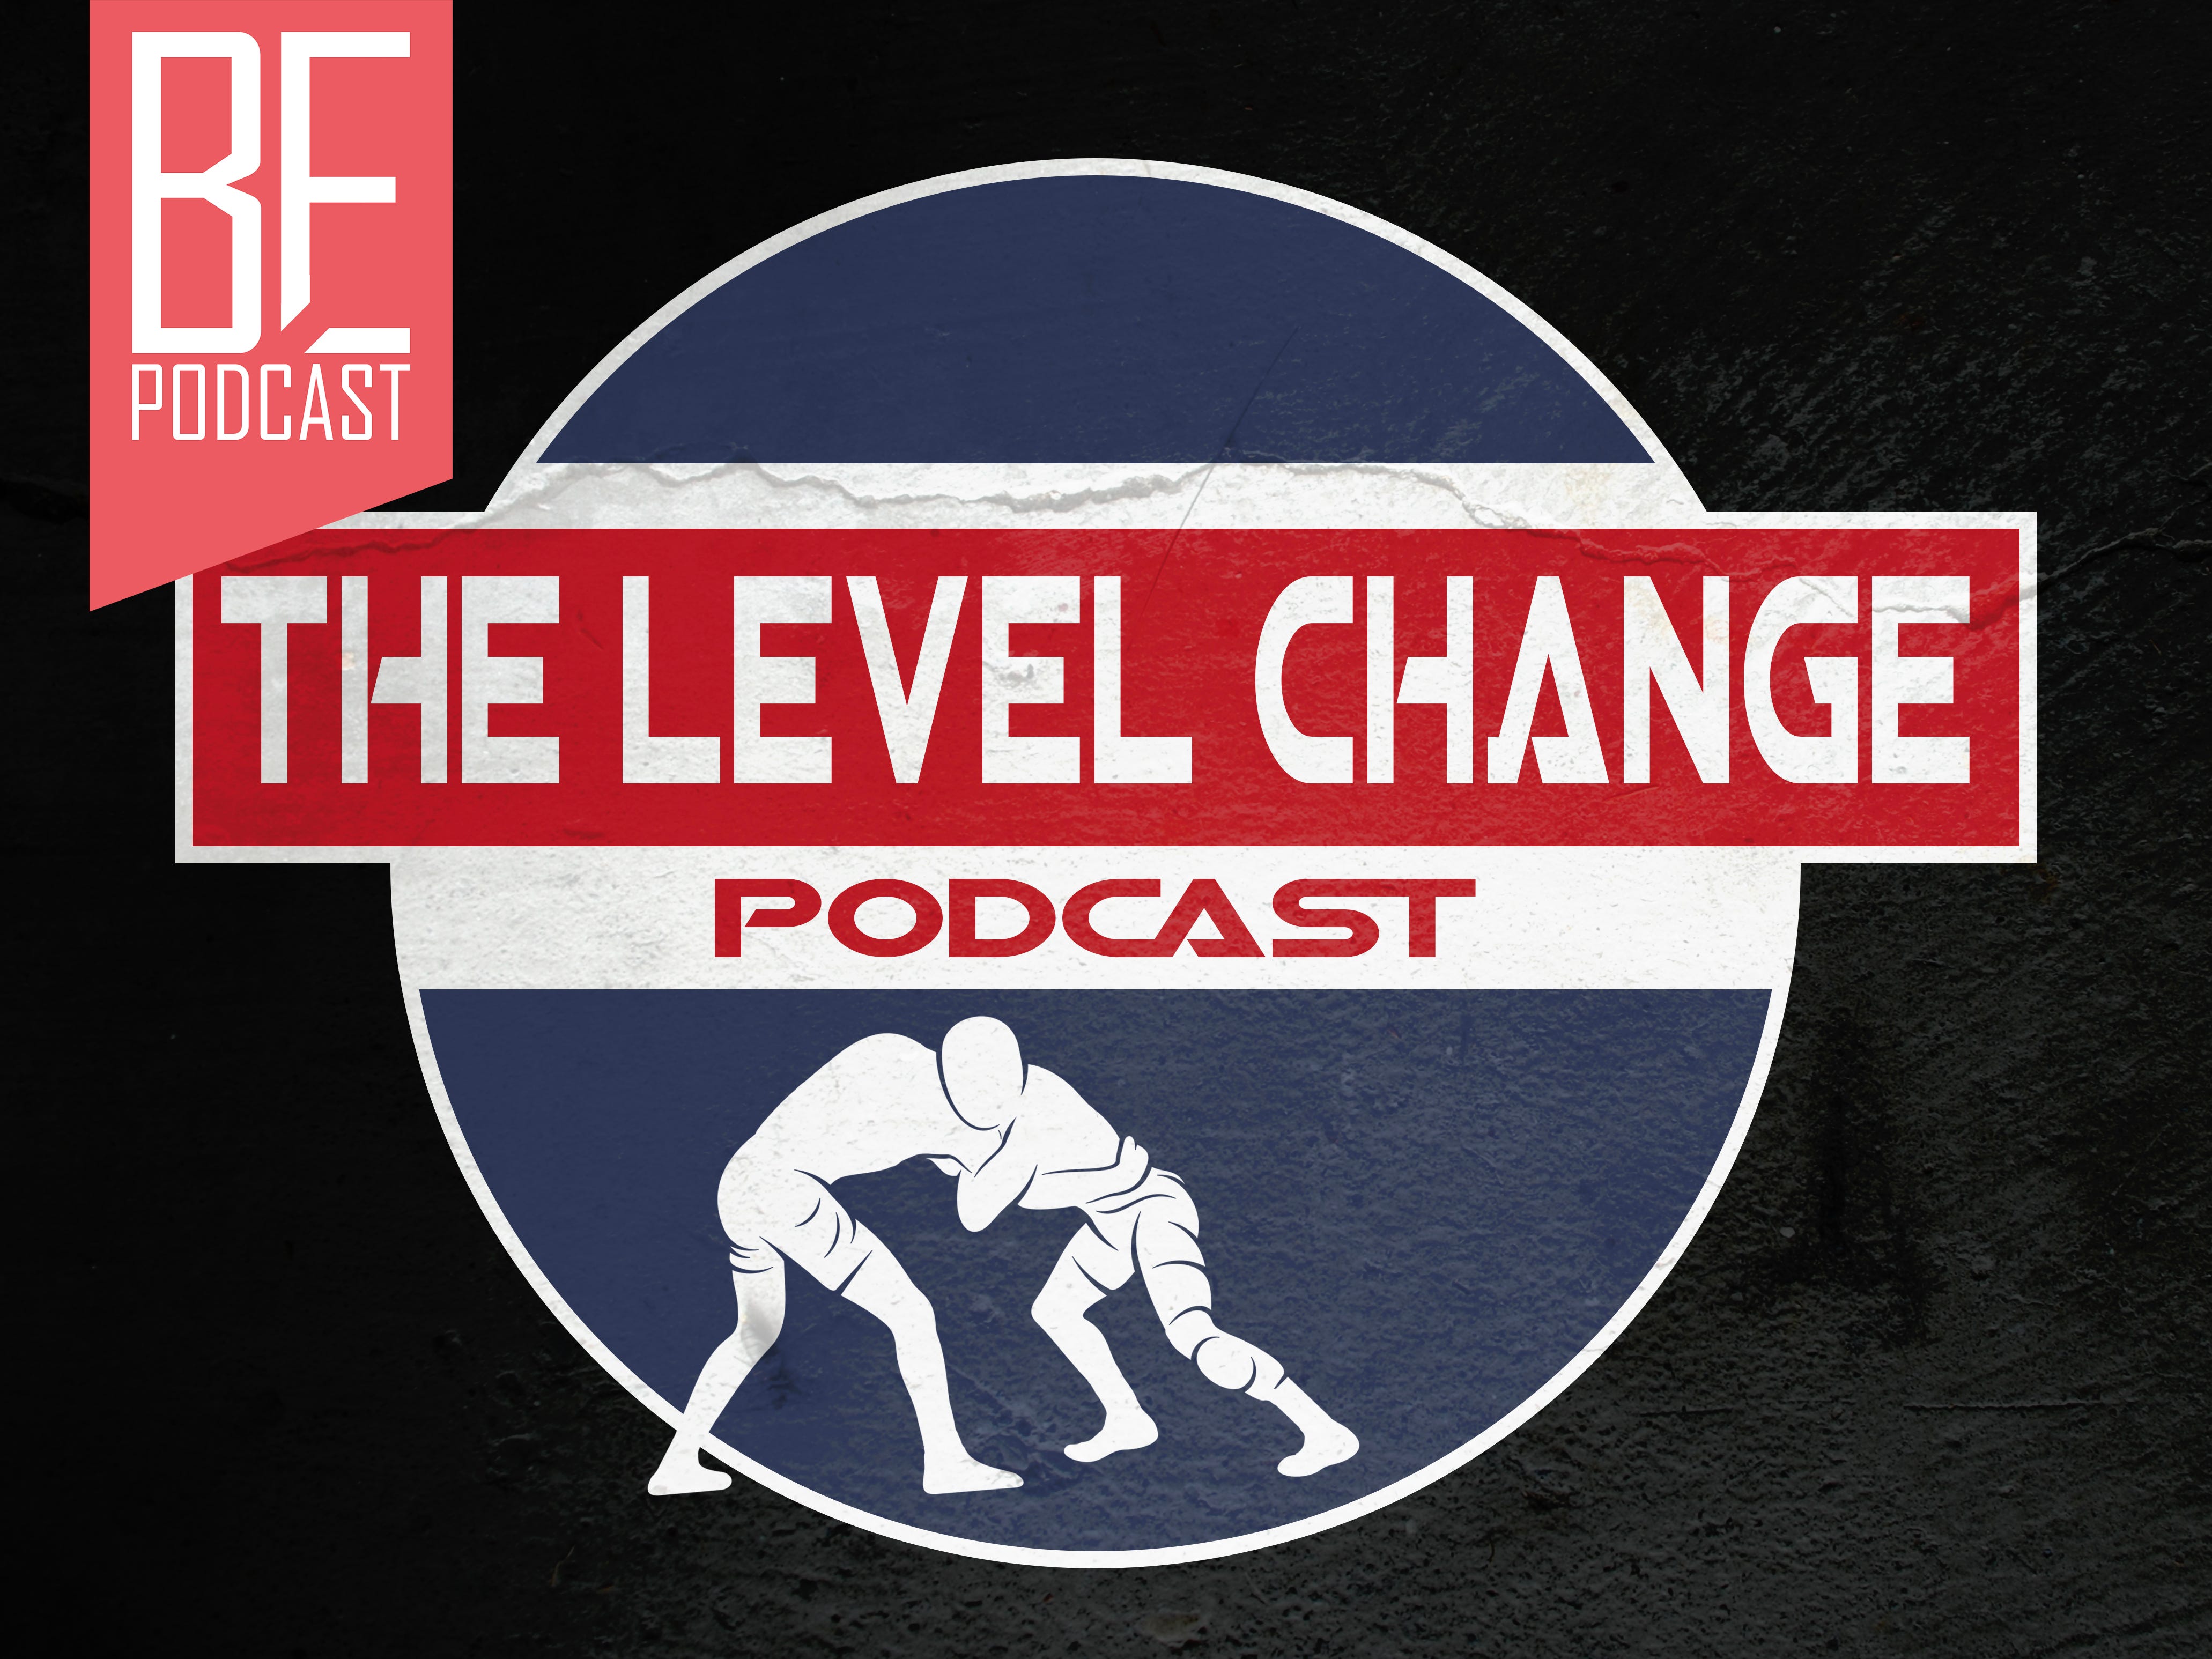 UFC Podcast, MMA Podcast, MMA, UFC, The Level Change Podcast, Stephie Haynes, Victor Rodriguez, MMA News, UFC News, UFC Previews, UFC Reviews, 